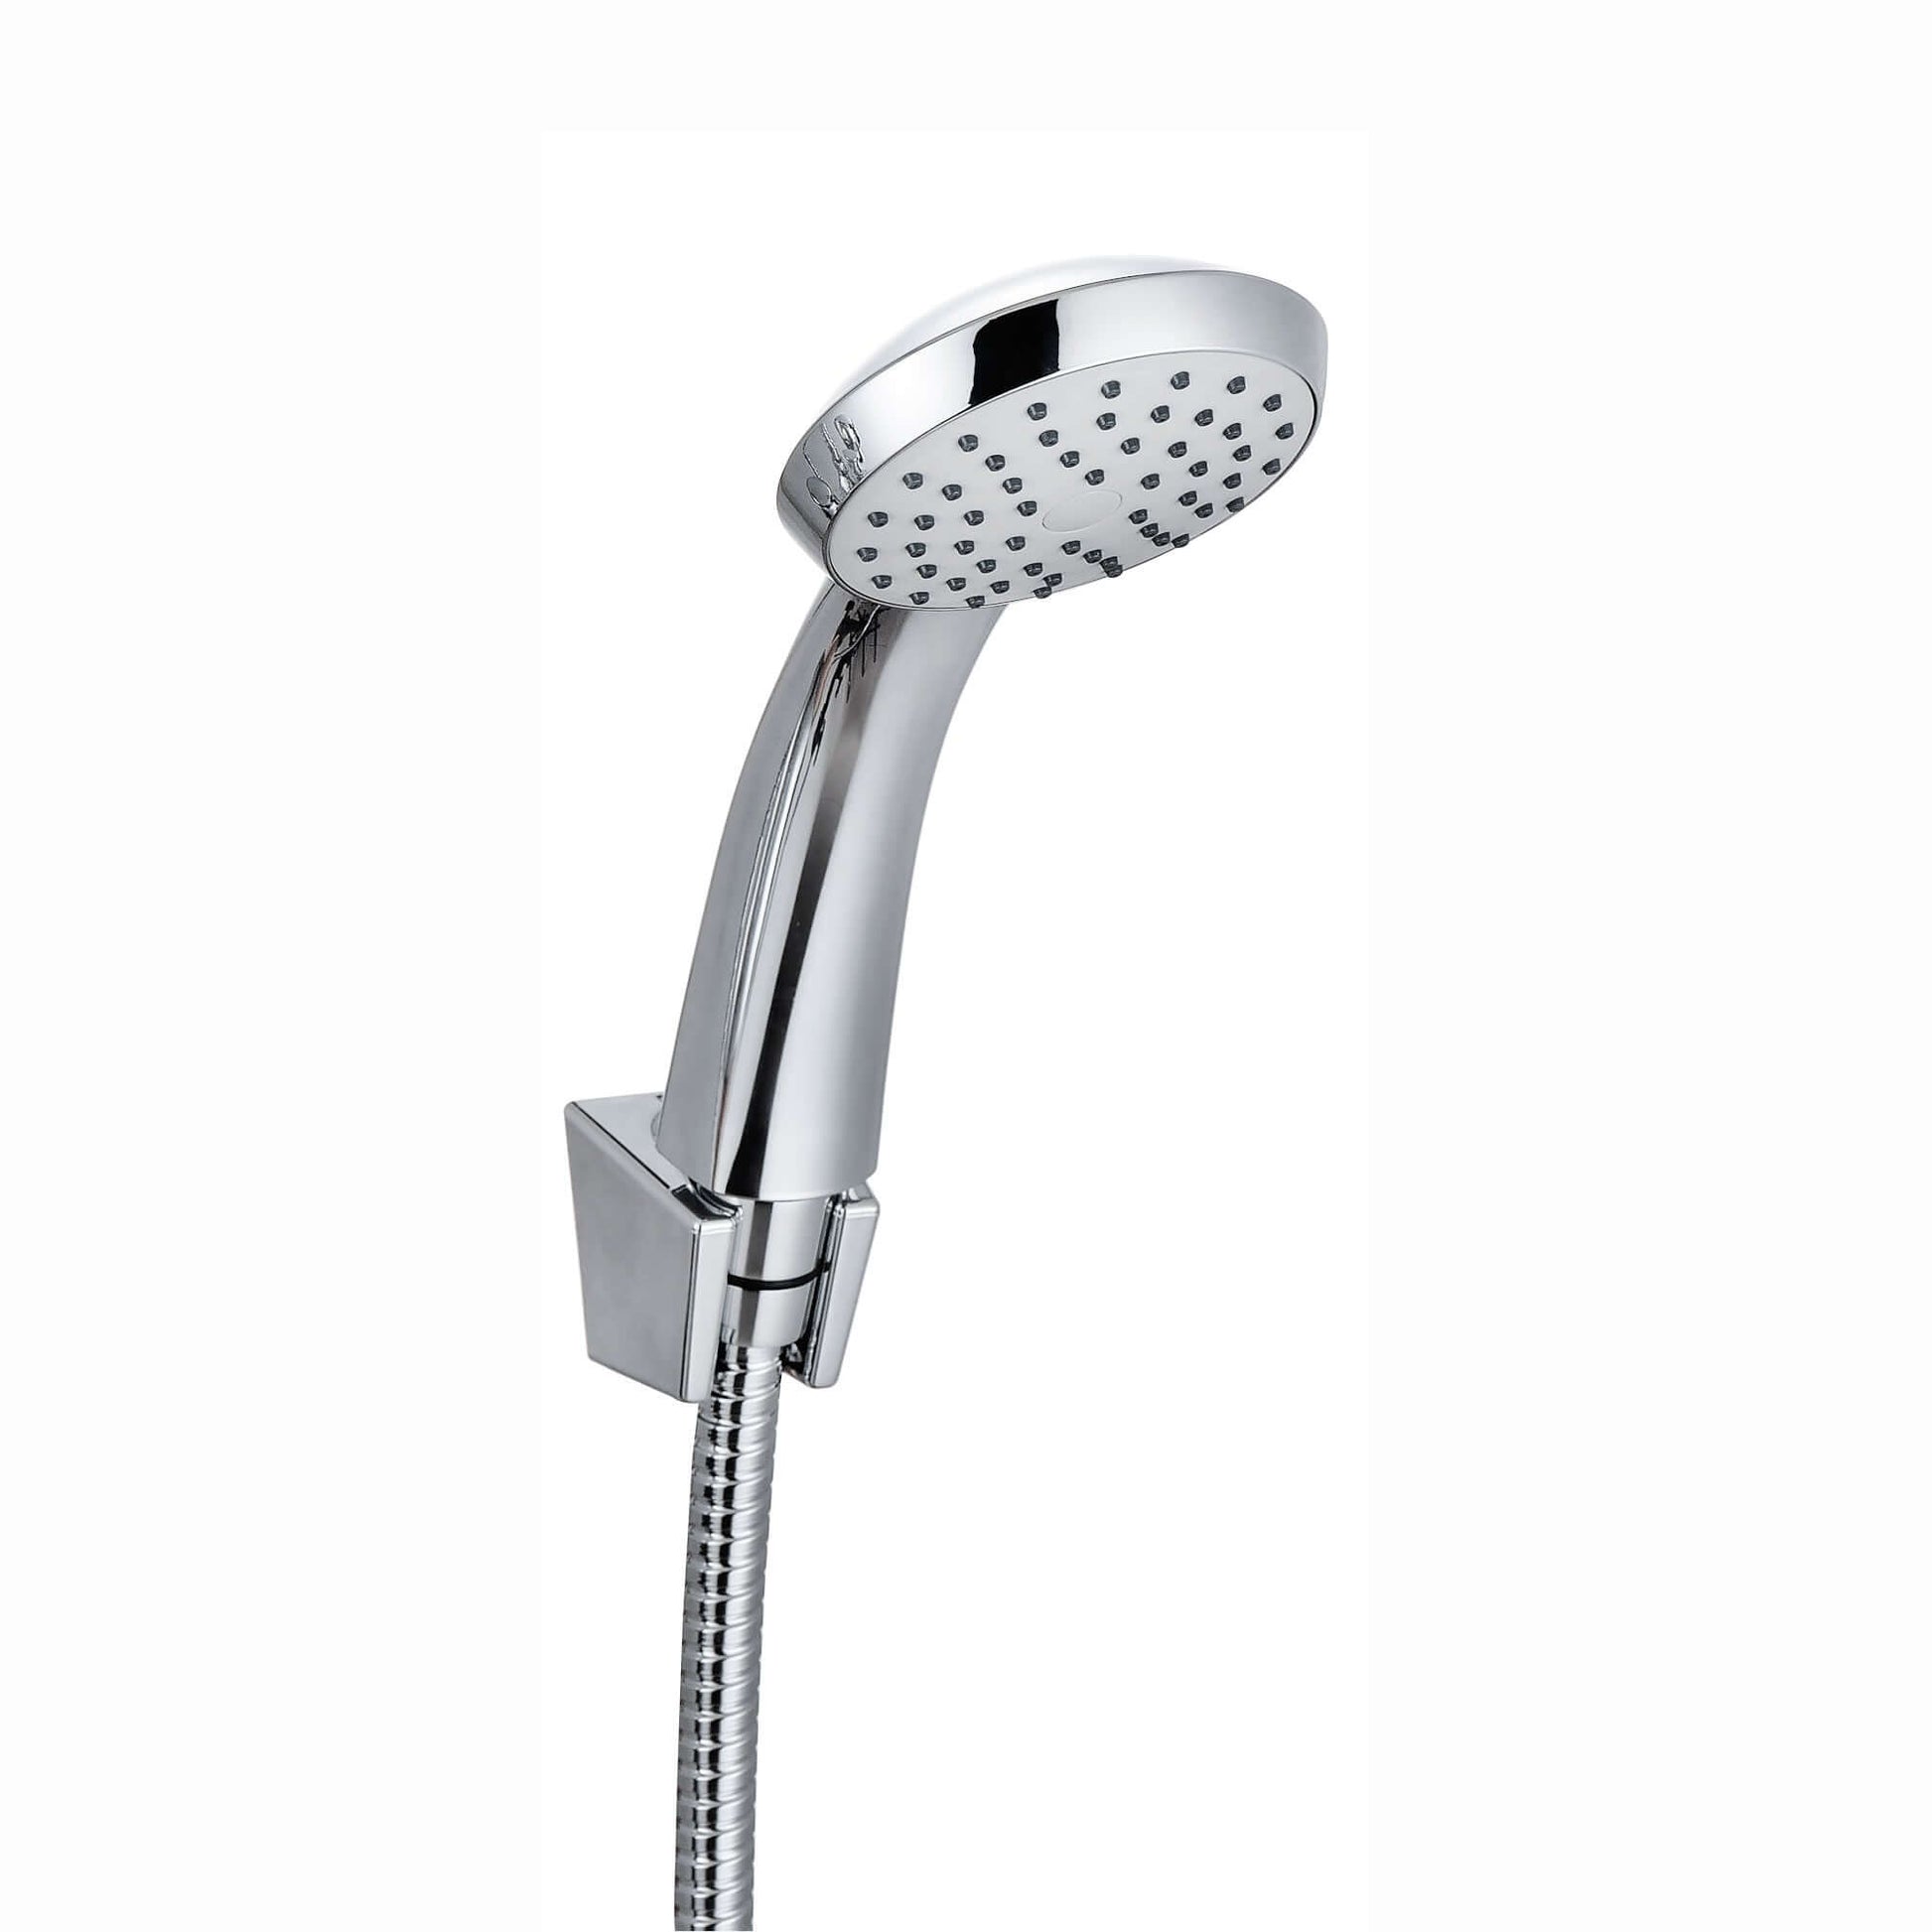 Quest bath shower mixer filler tap modern with knobs - chrome - Taps